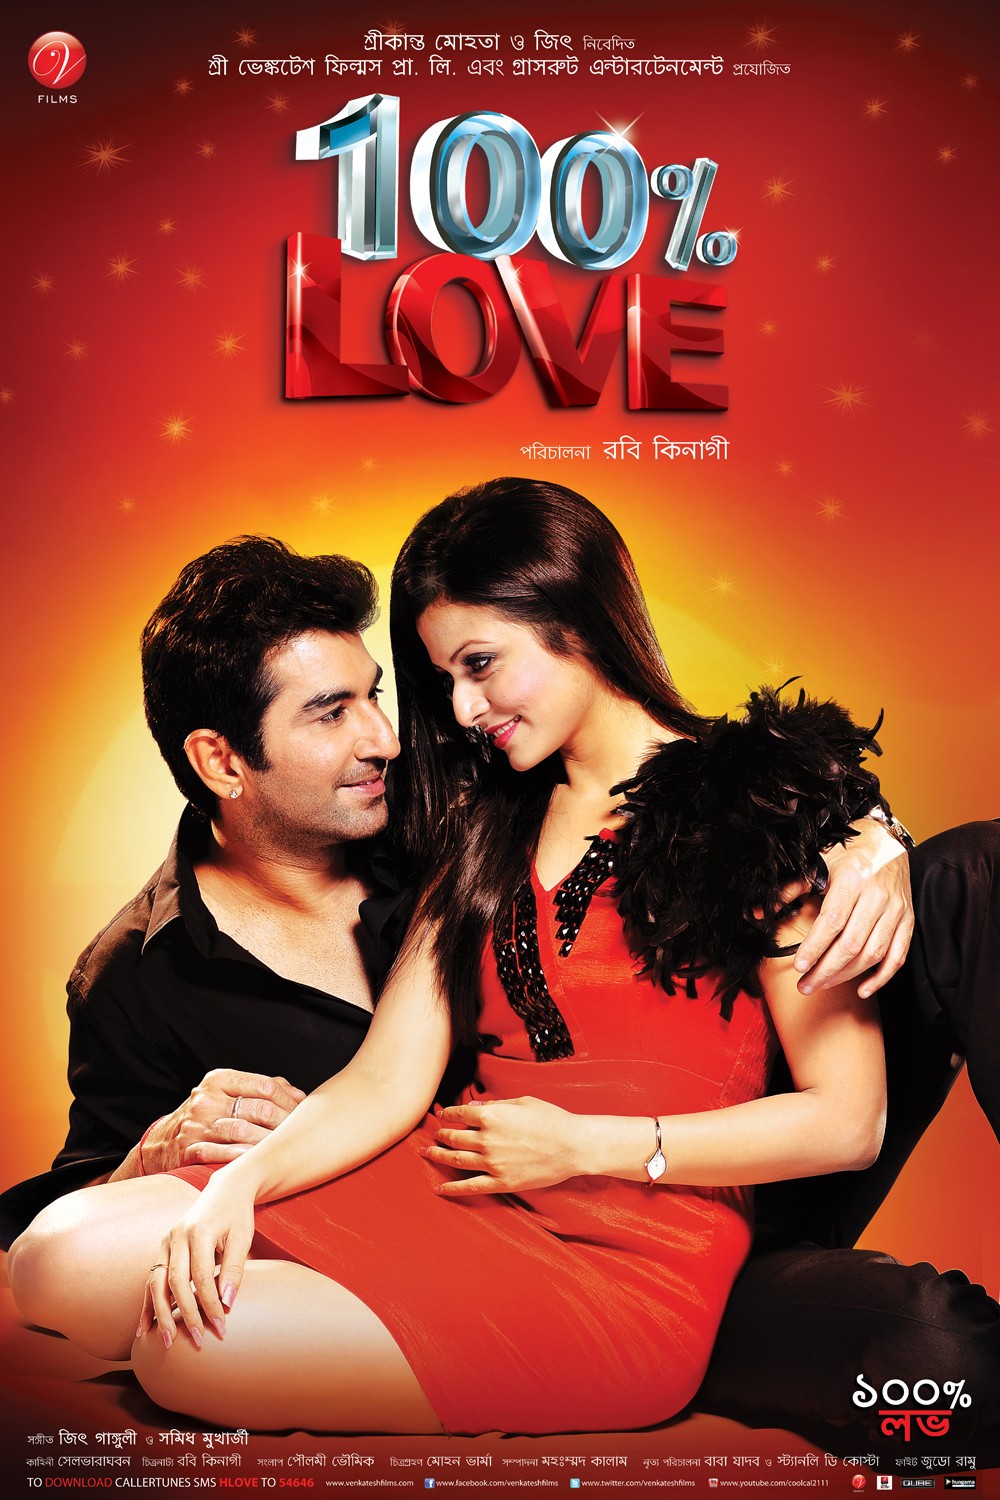 100 love telugu movie dubbed in hindi free